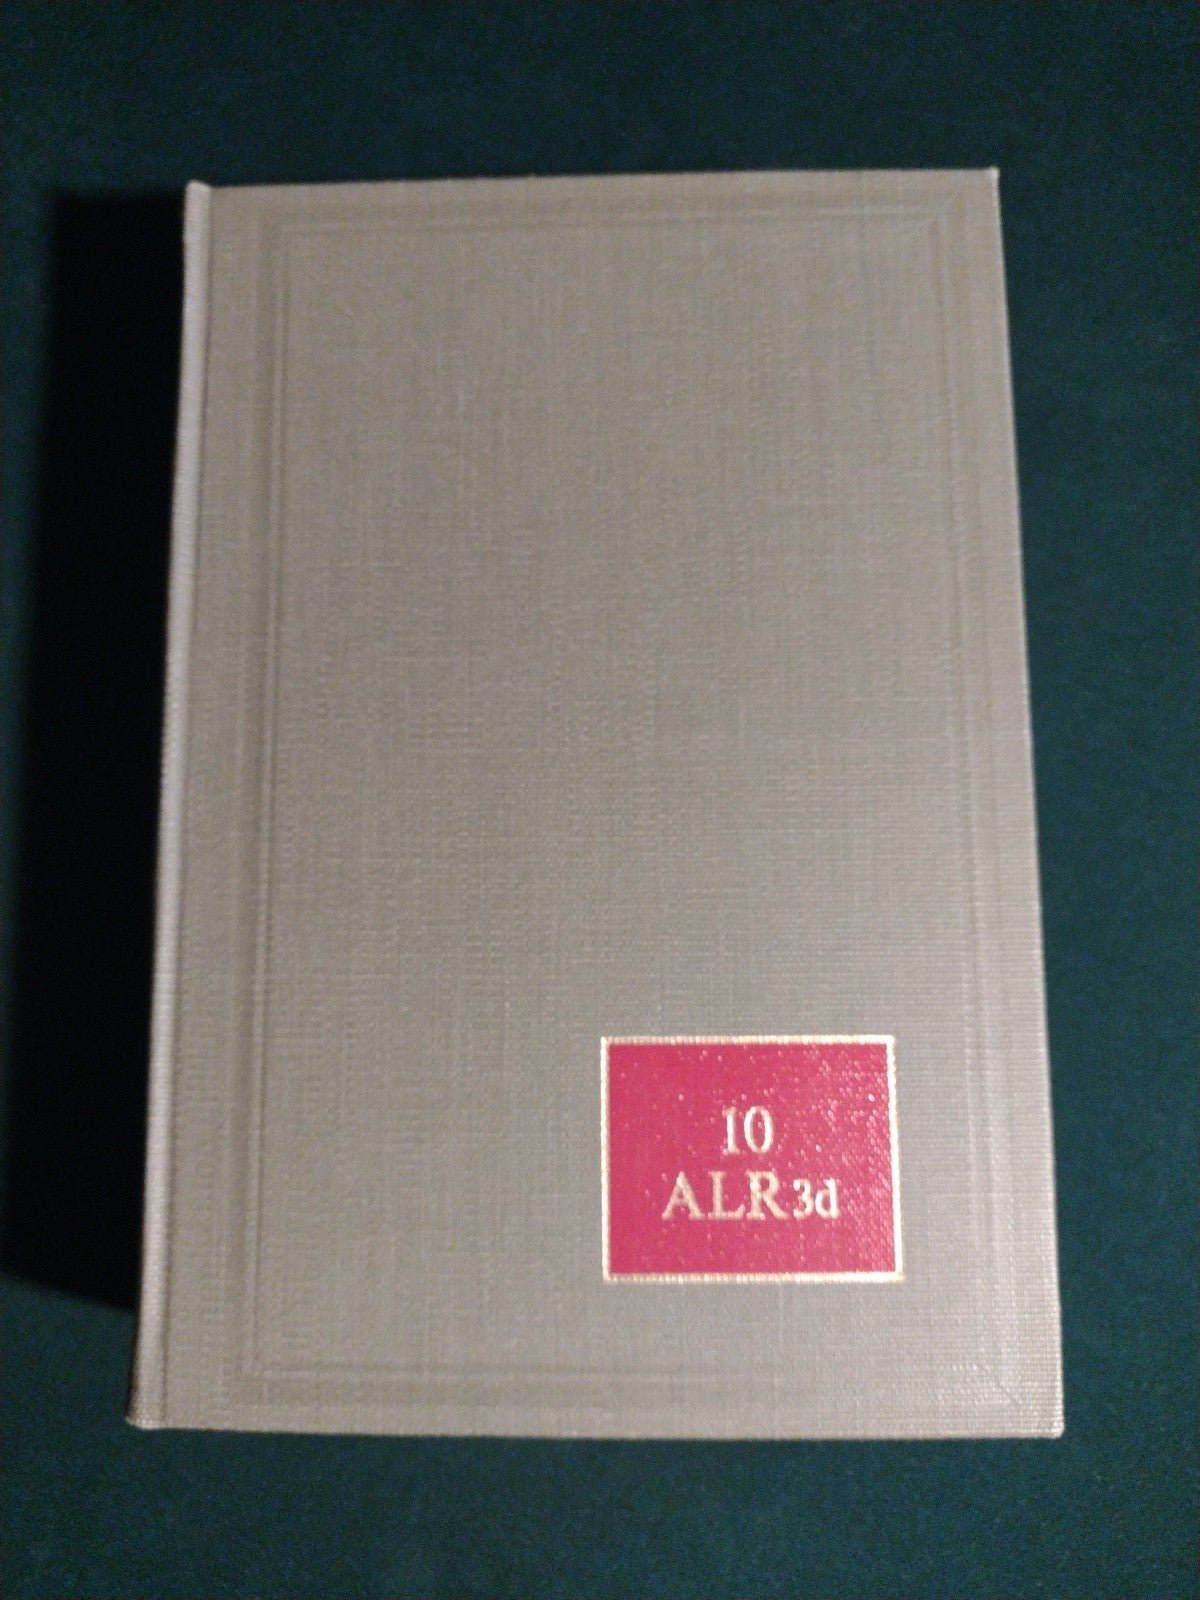 American Law Reports Vol 10 ALR 3d Cases & Annotations (HC 1966) & supplement i4MOm1w1L